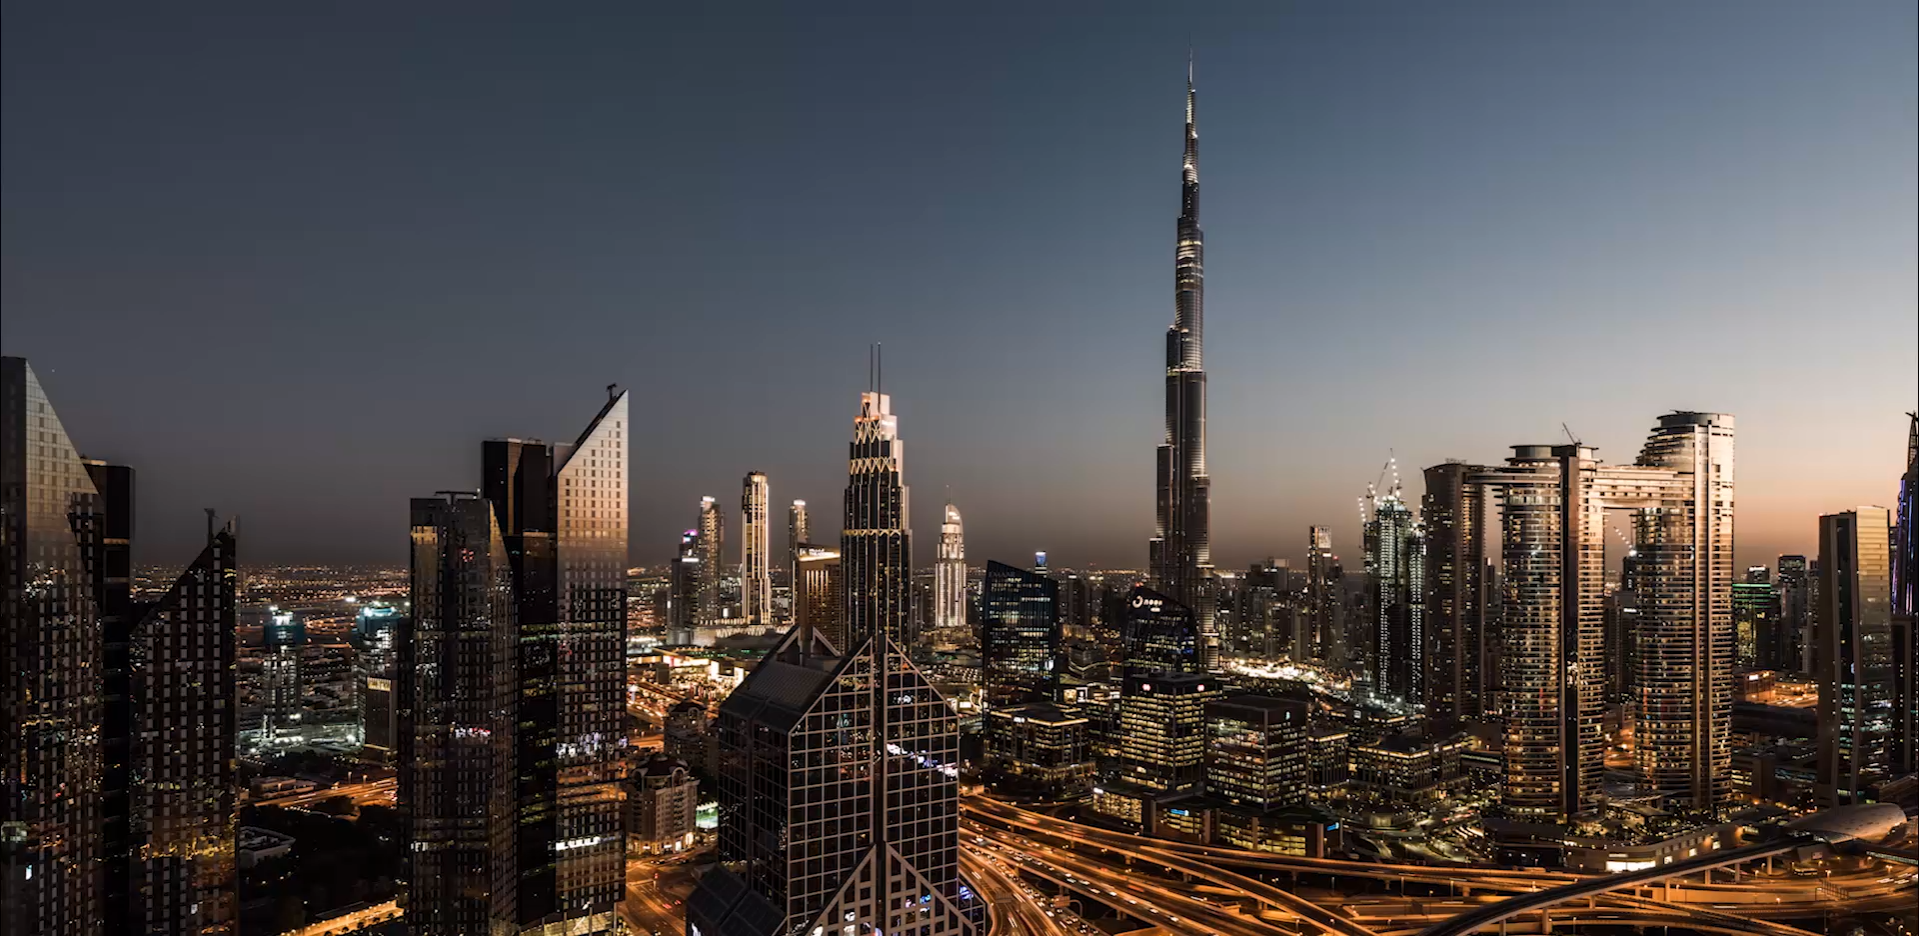 UAE's biggest hand-tool showroom opens in Dubai - Construction Week Online